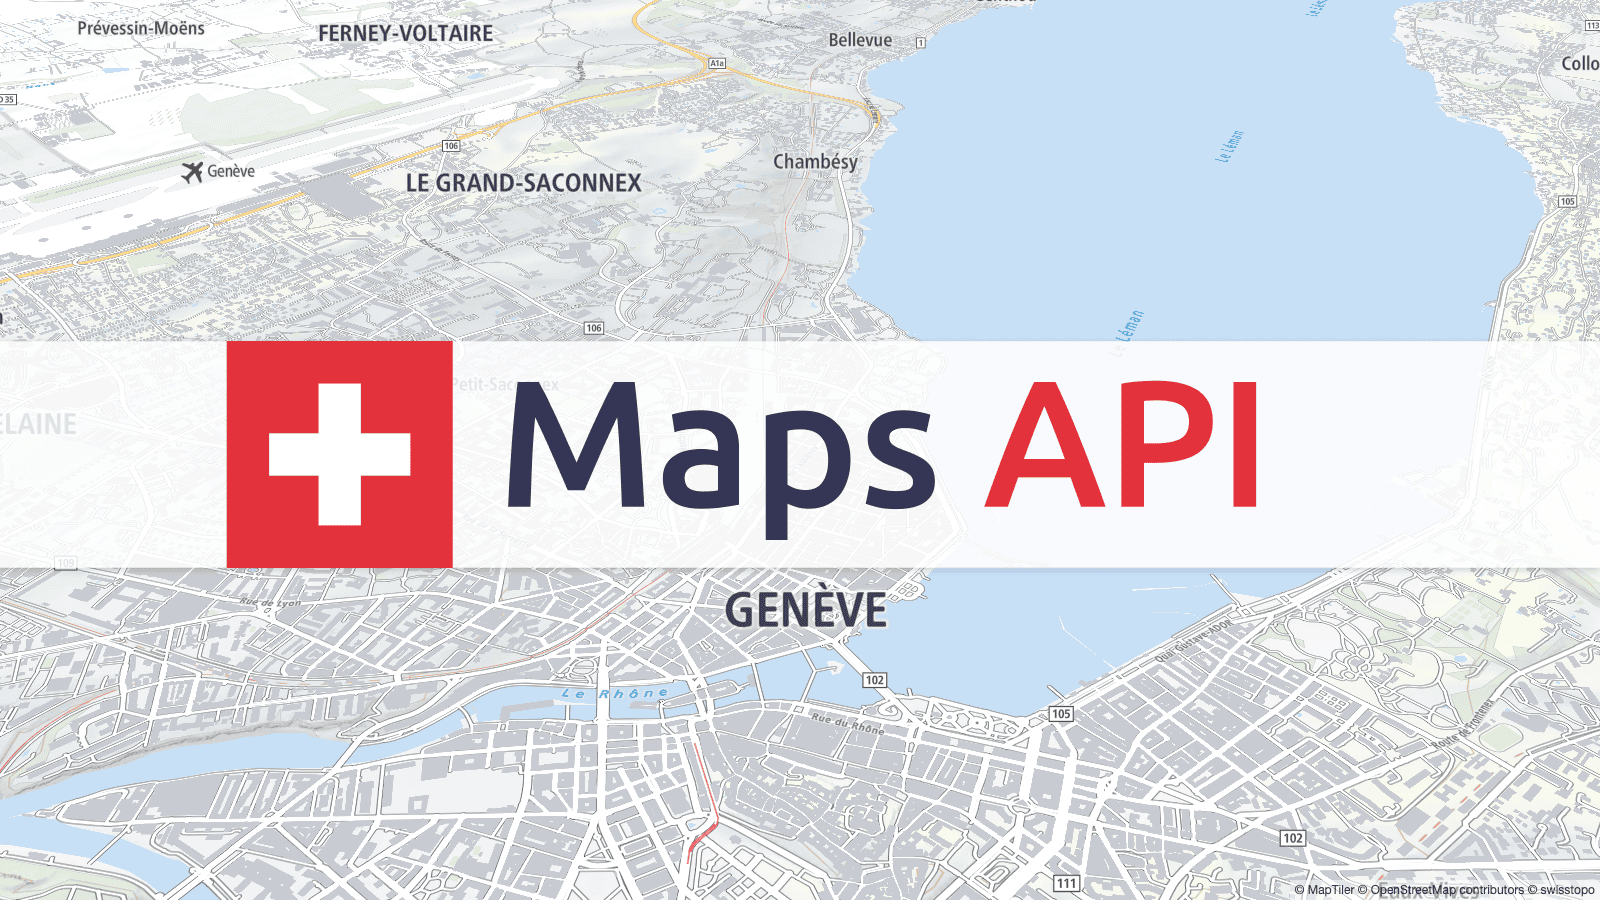 WMTS for Swisstopo maps